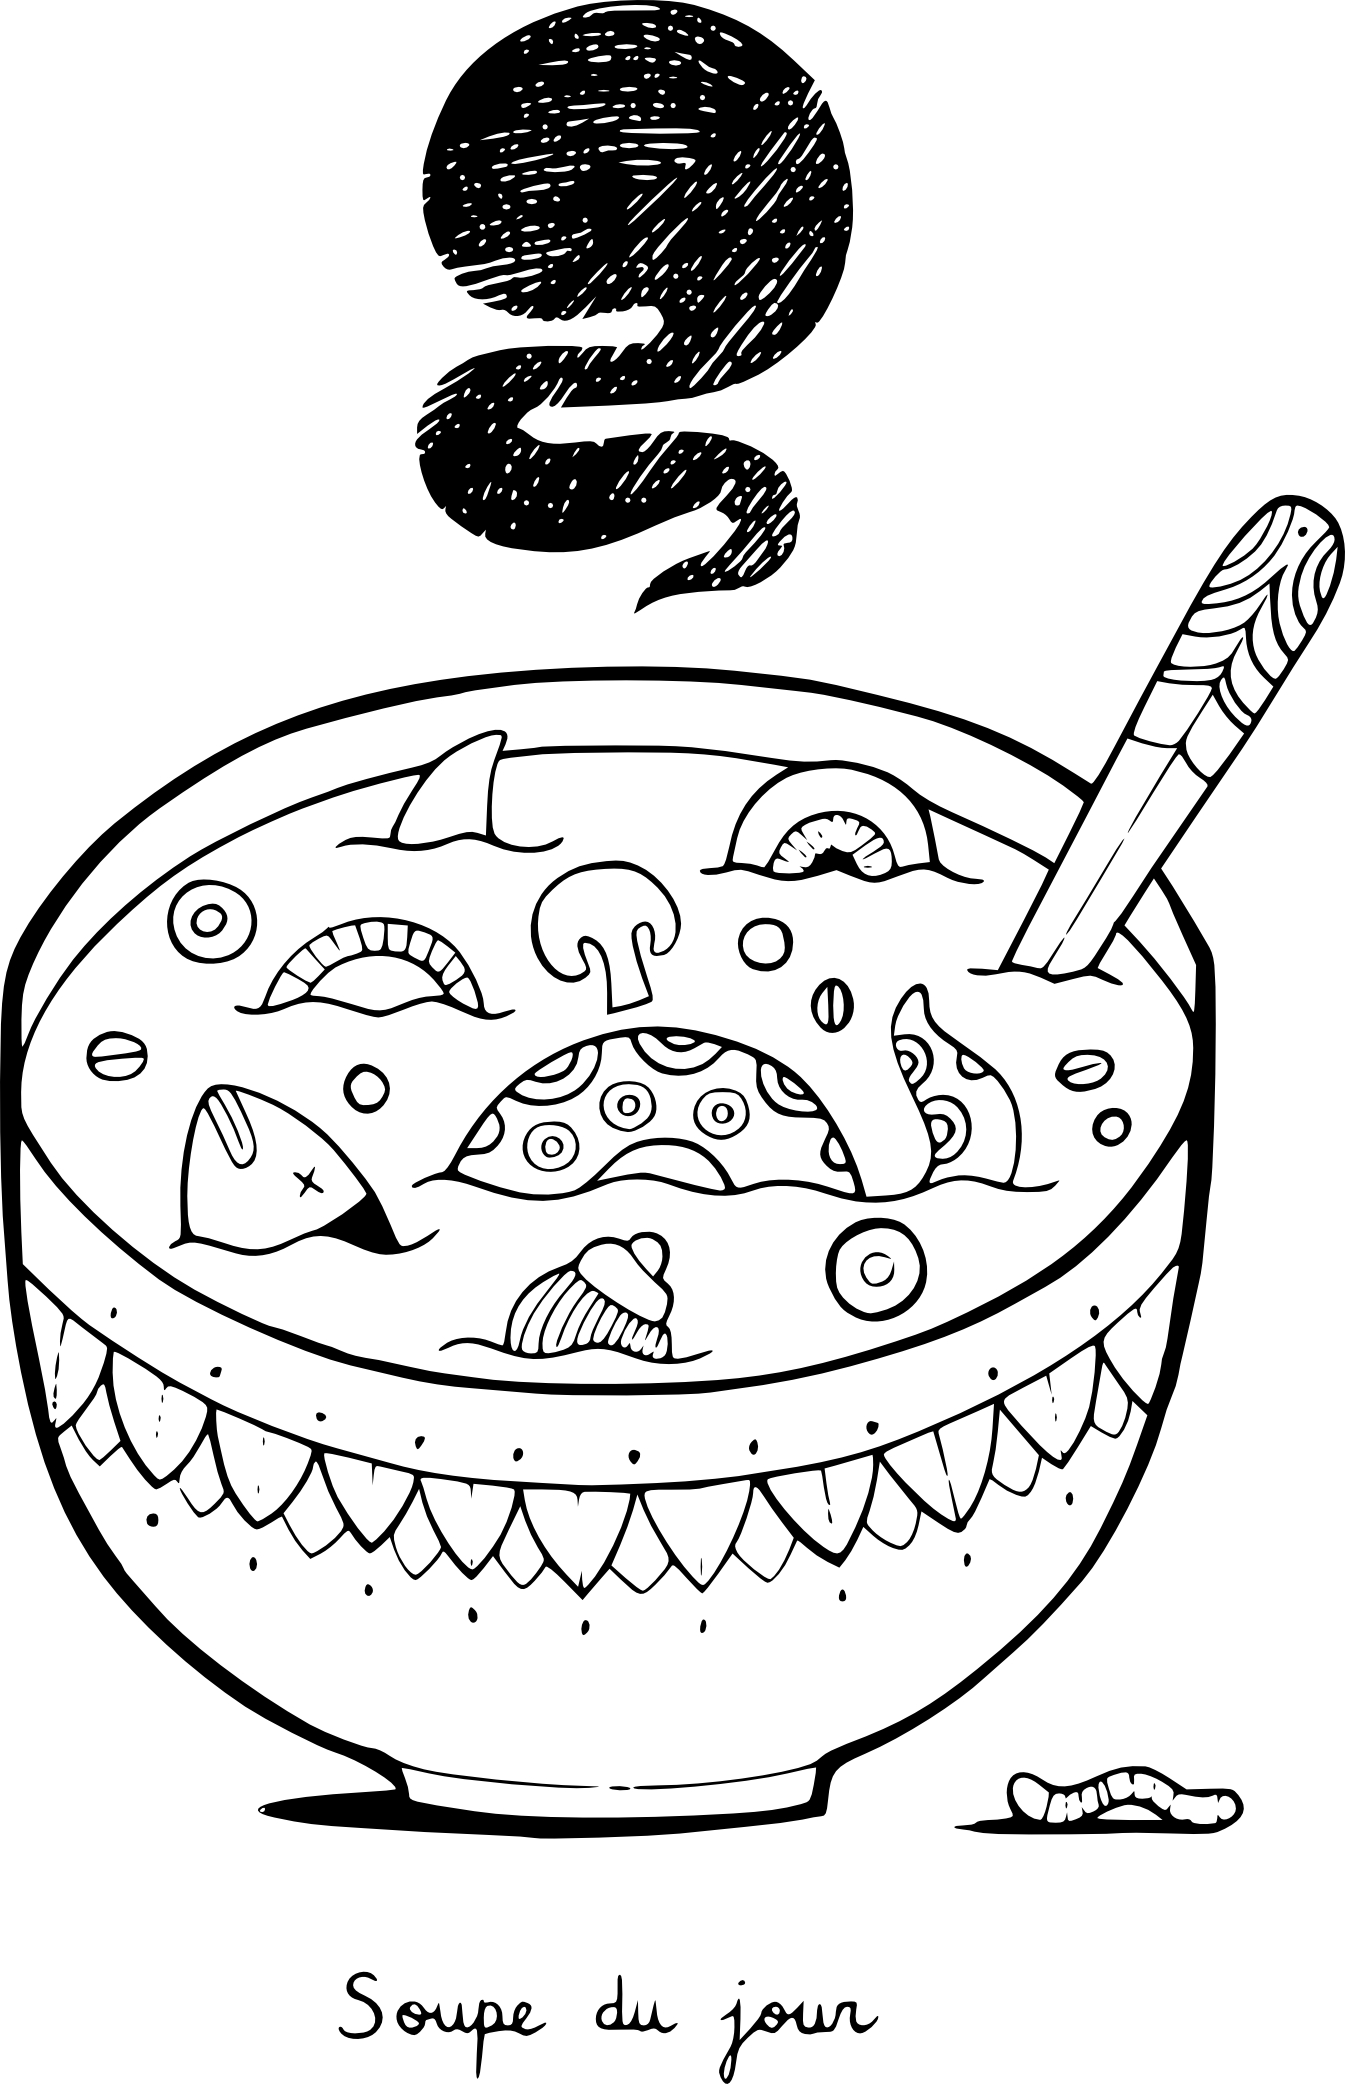 Soup coloring page